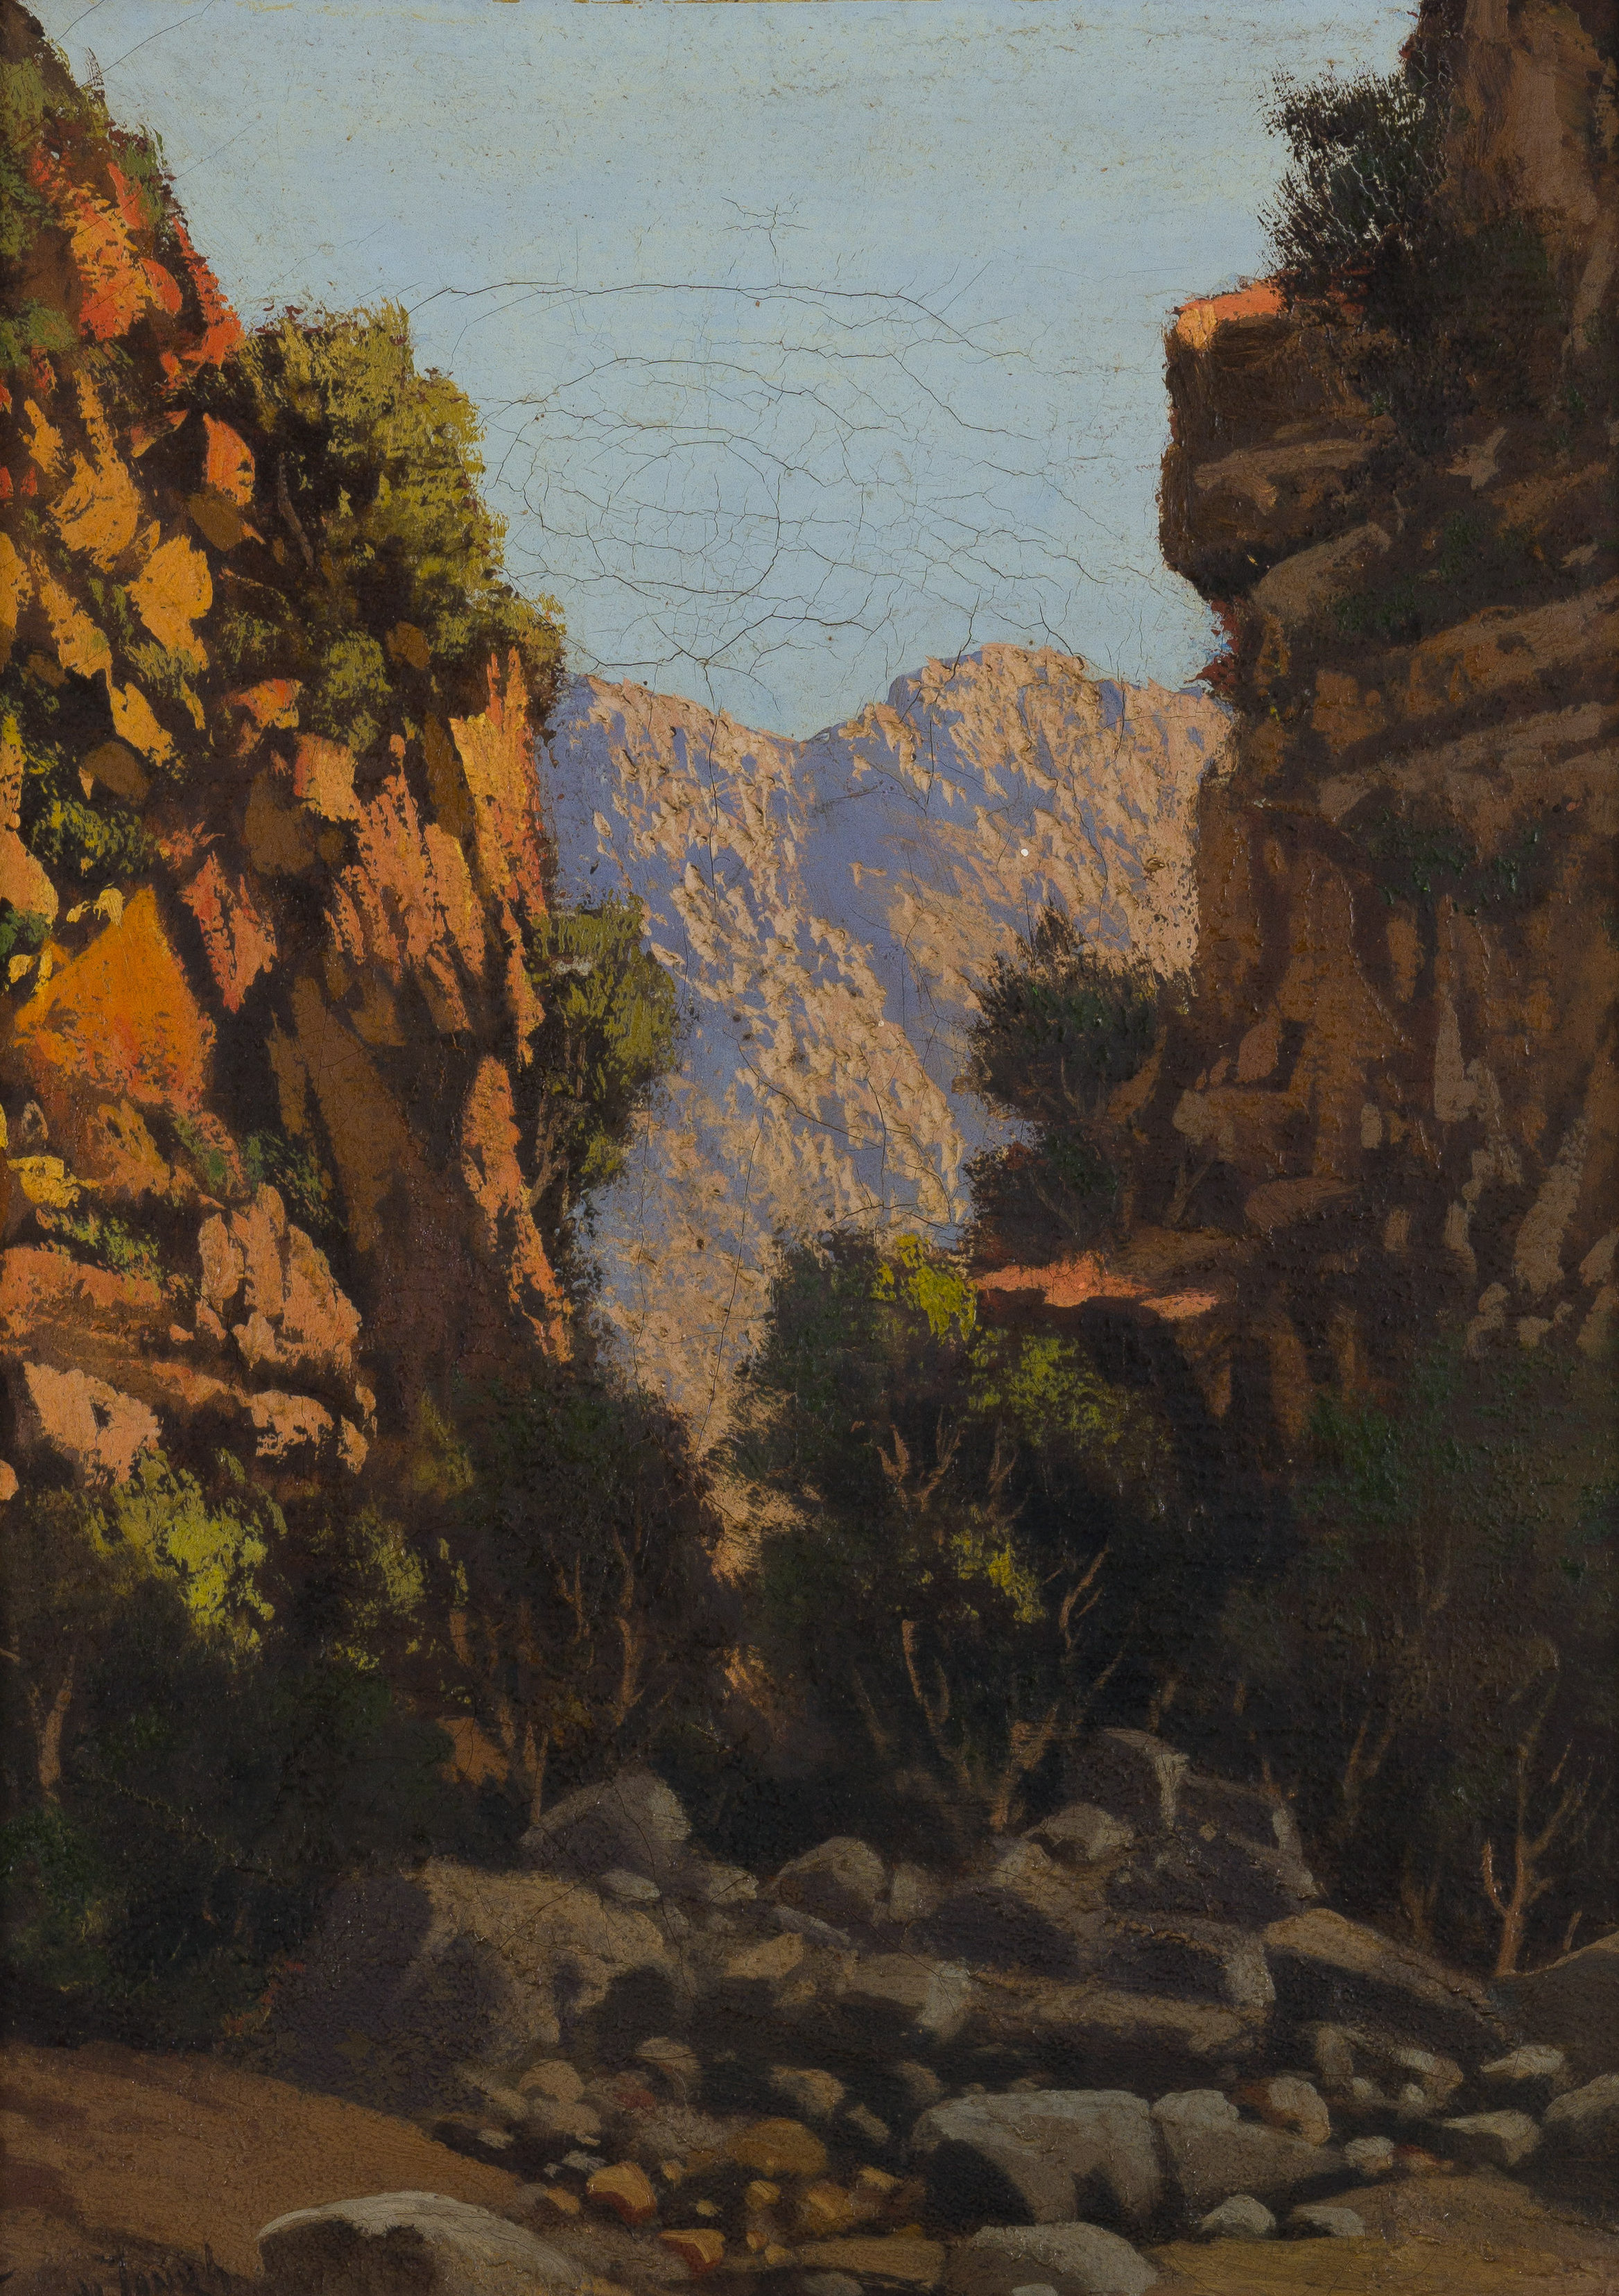 Tinus de Jongh; Mountain Landscape